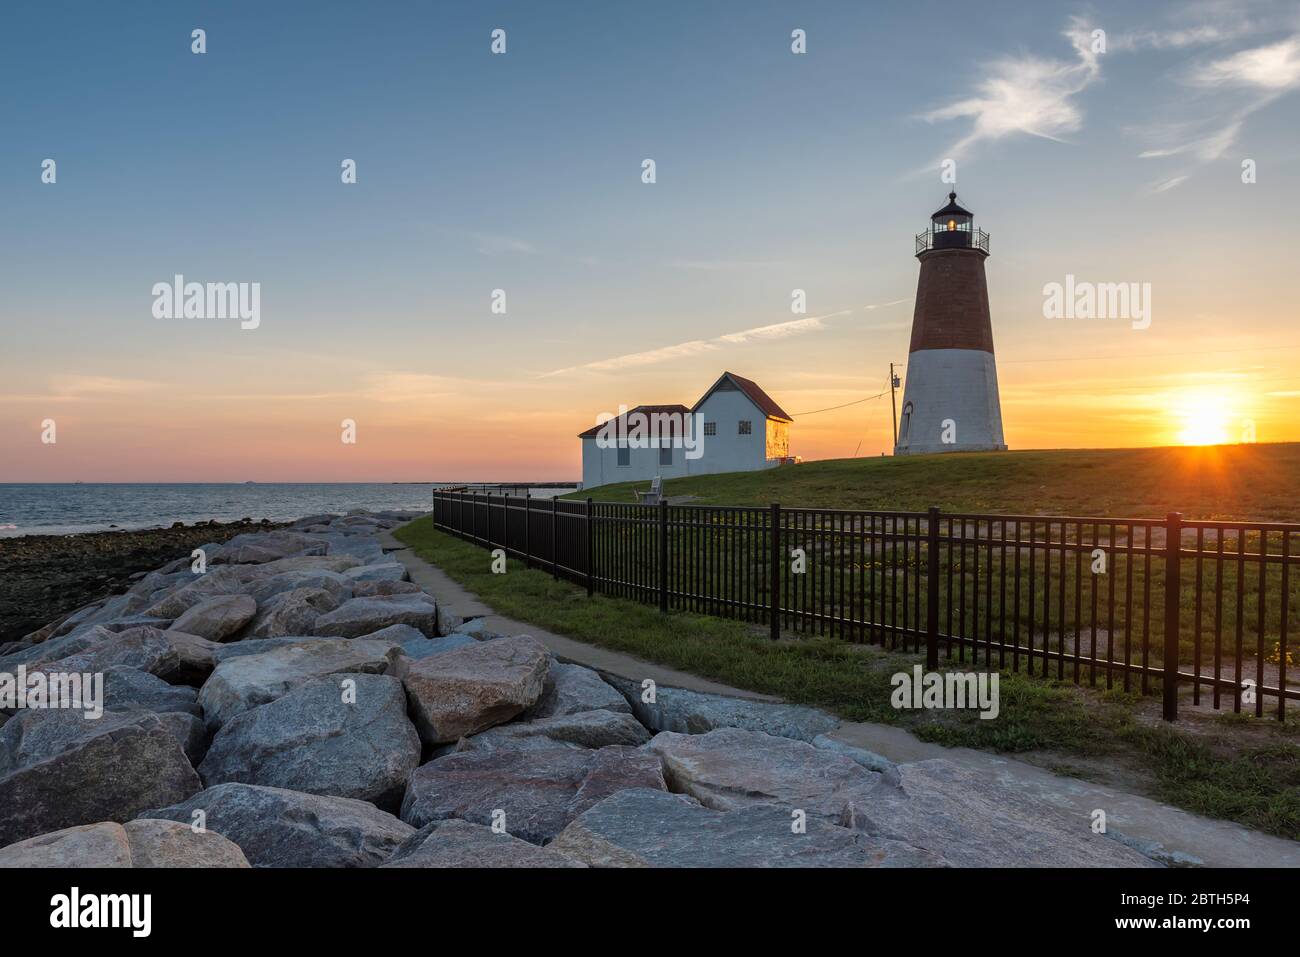 The Point Judith lighthouse at sunset near Narragansett, Rhode Island Stock Photo